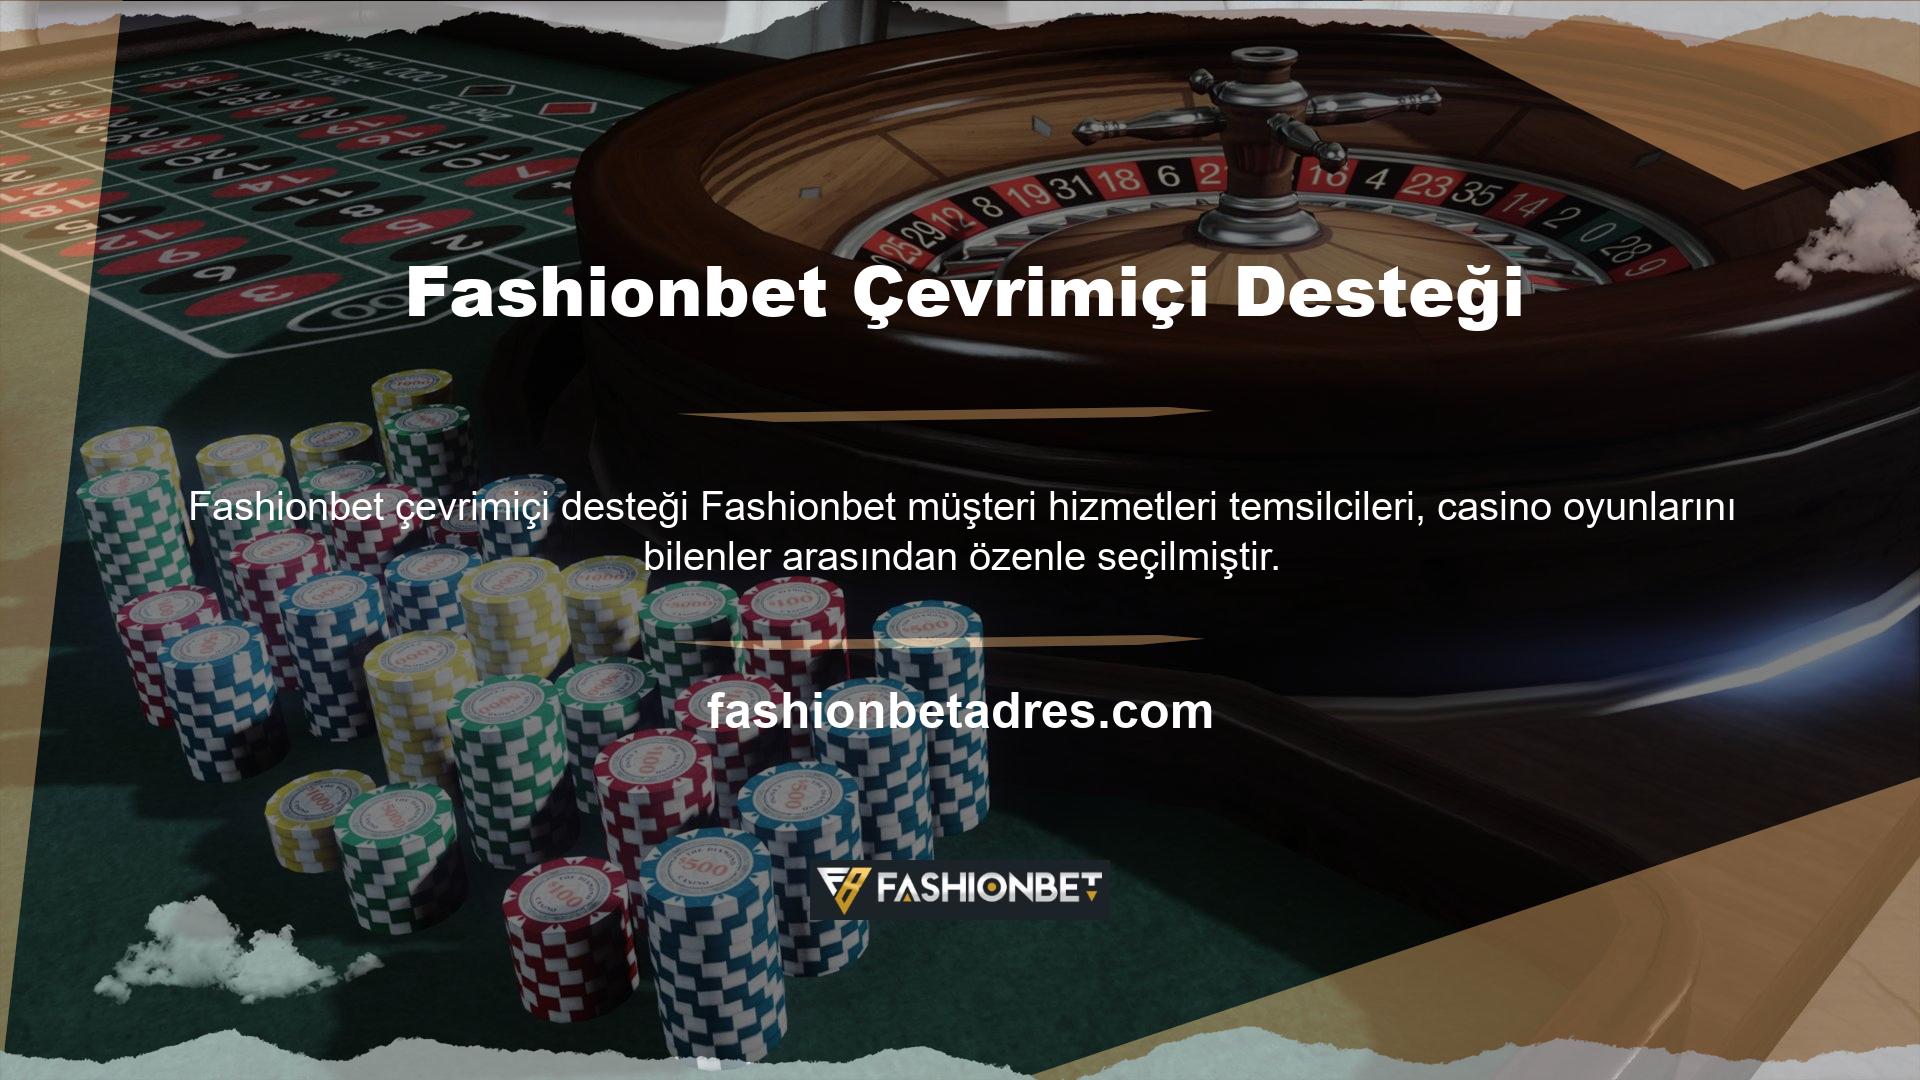 Fashionbet Çevrimiçi Desteği